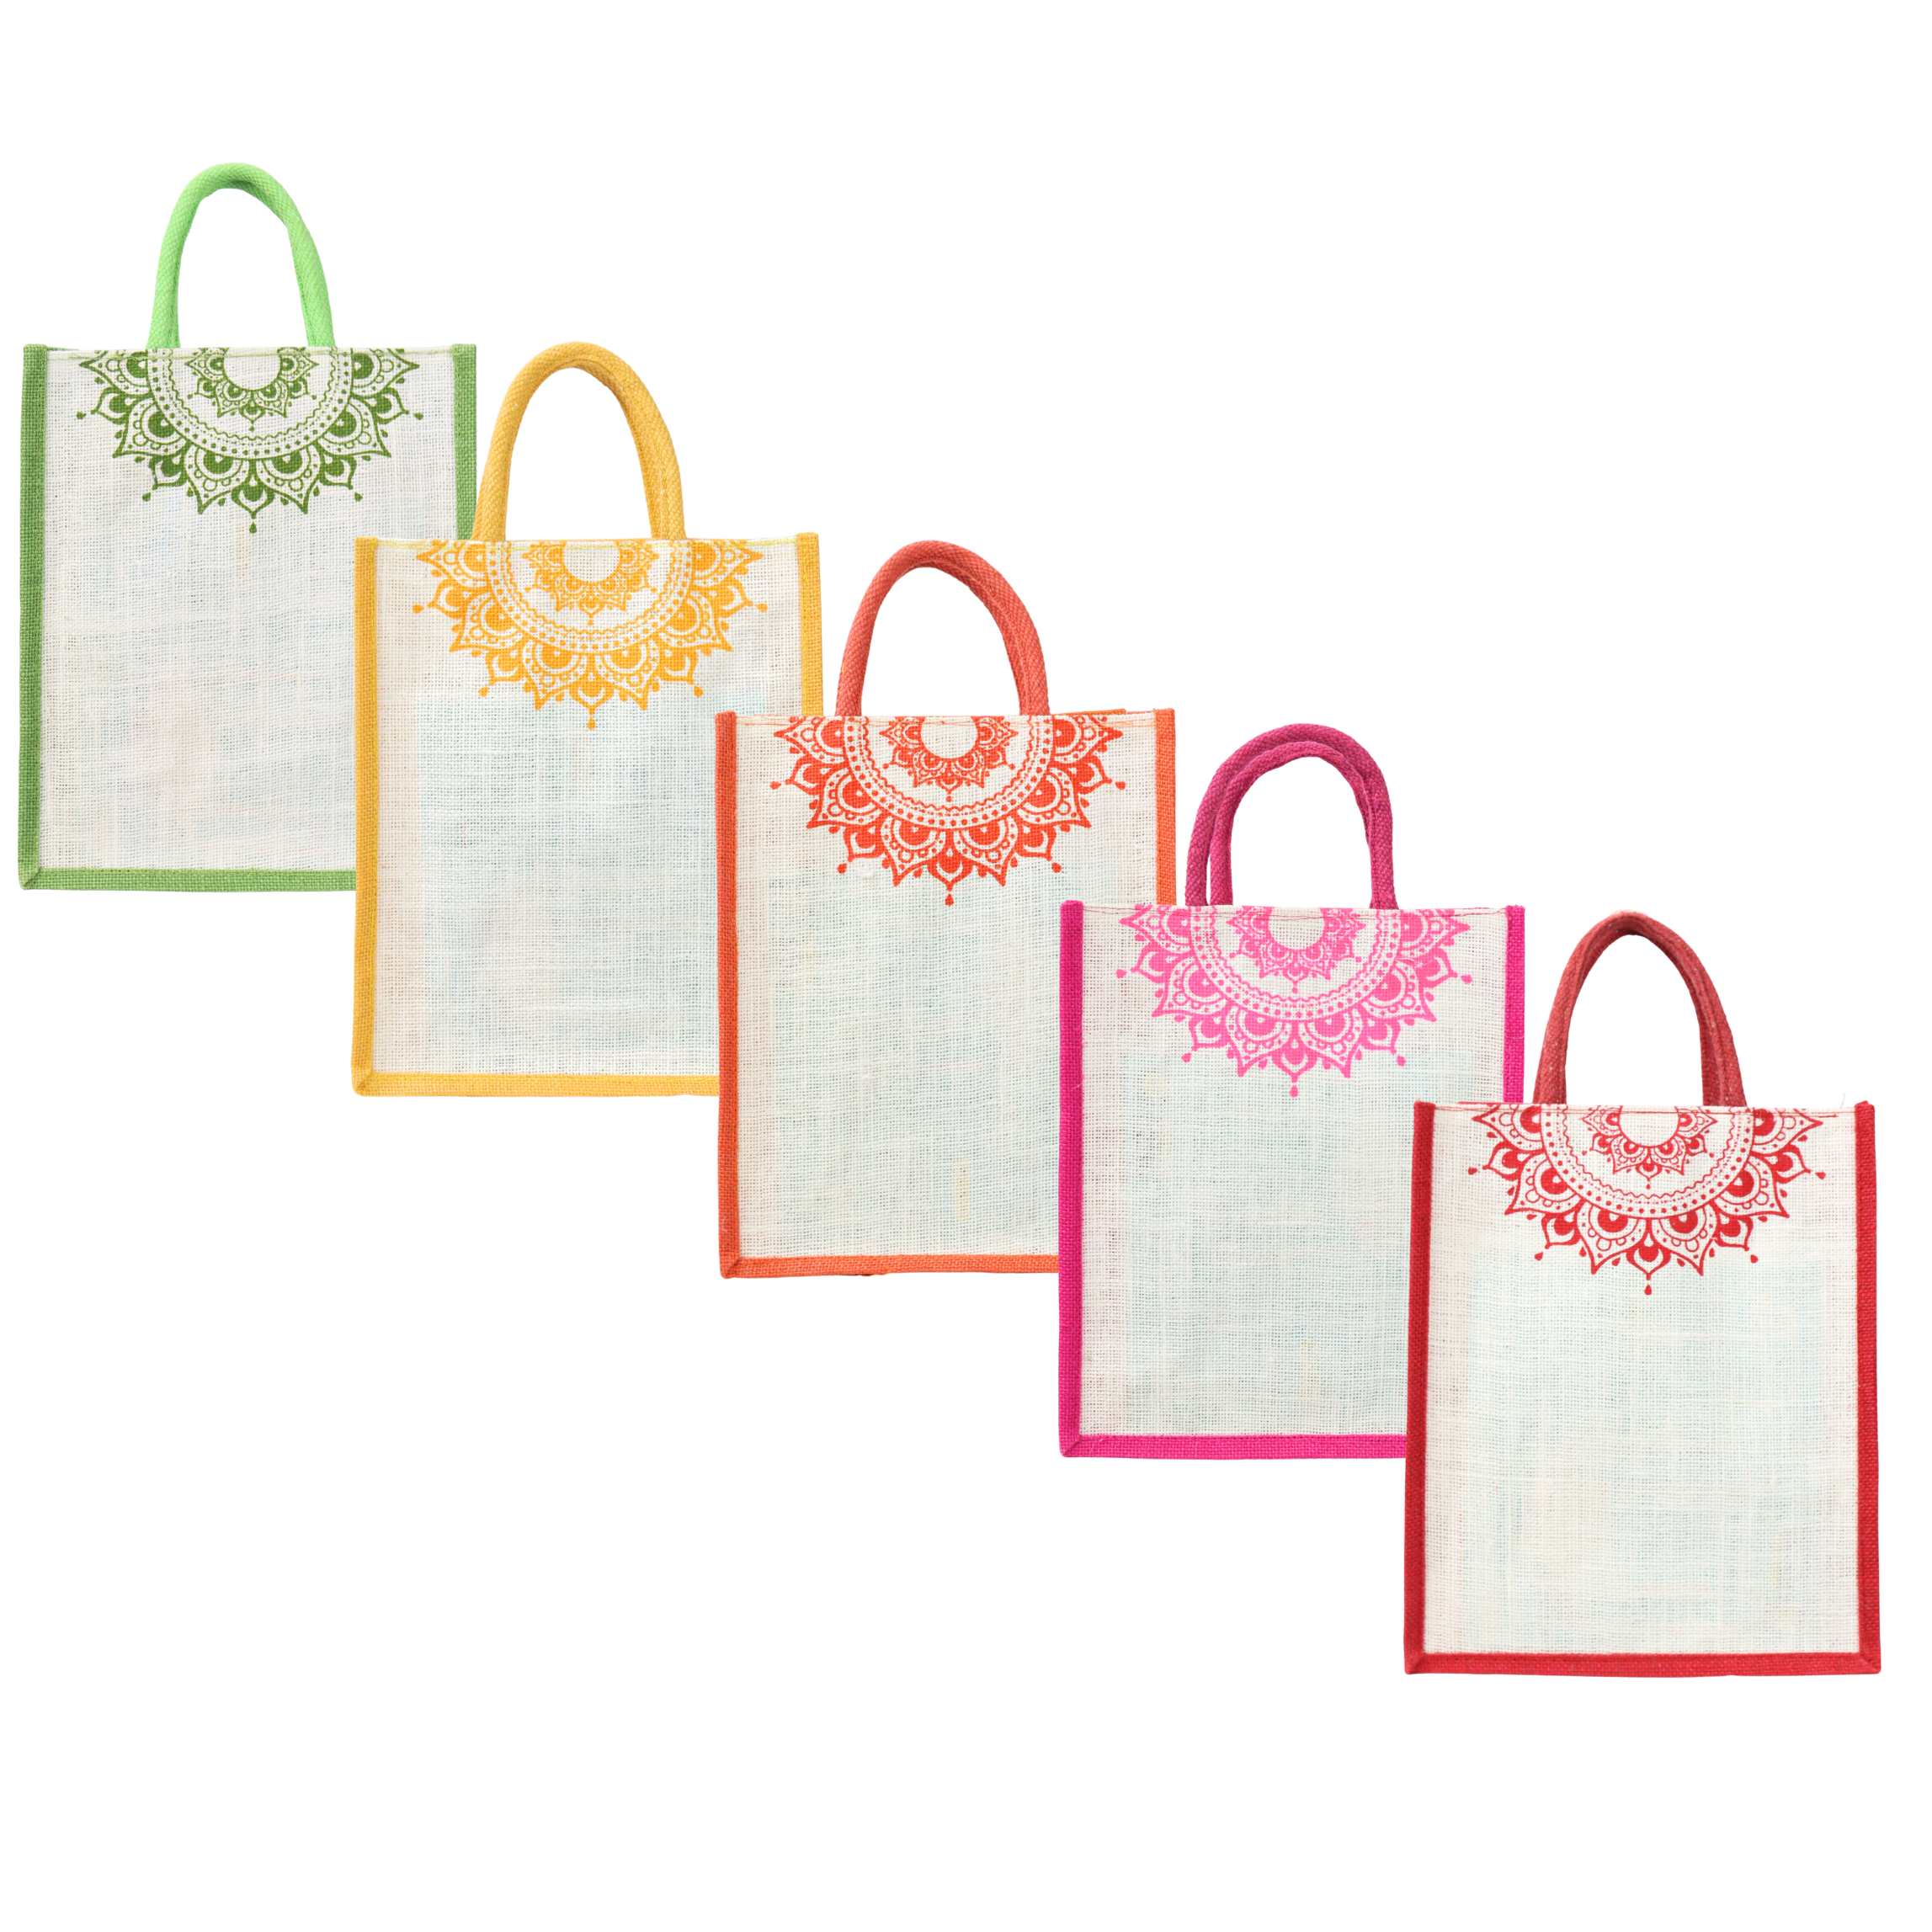 Buy Jute Bags online at Best Price from Desifavors